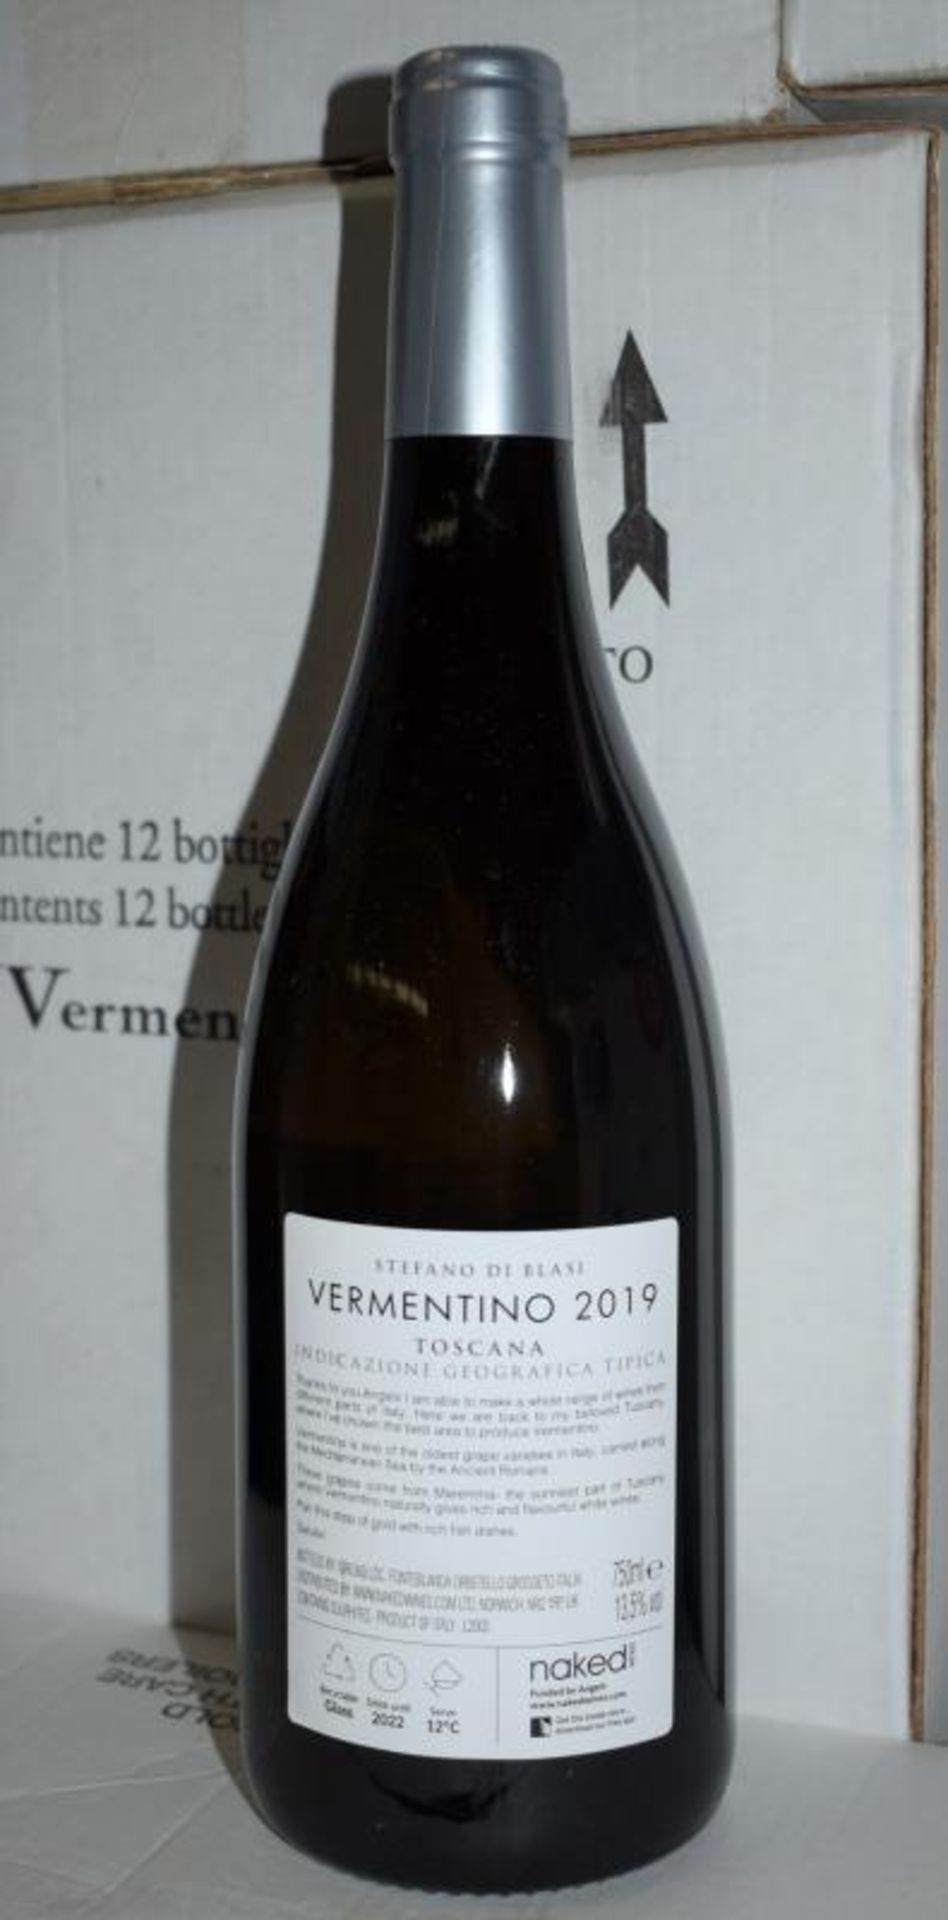 12 x Bottles of Stefano Di Blasi 2019 Vermentino Toscana 13.5% Wine - 750ml Bottles - Drink Until 20 - Image 2 of 6